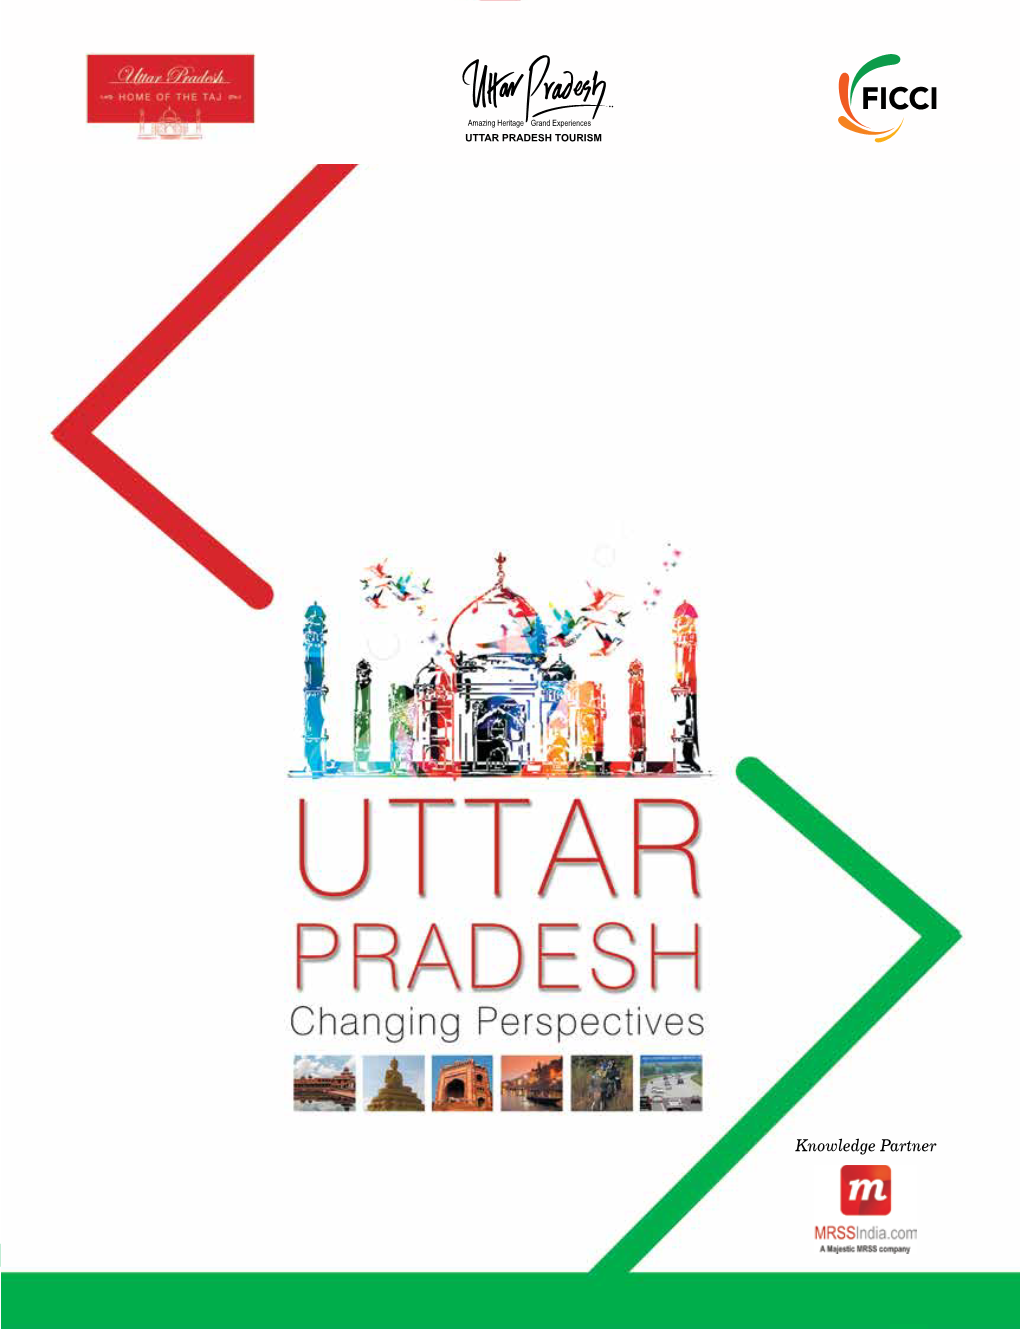 Uttar Pradesh Tourism Report